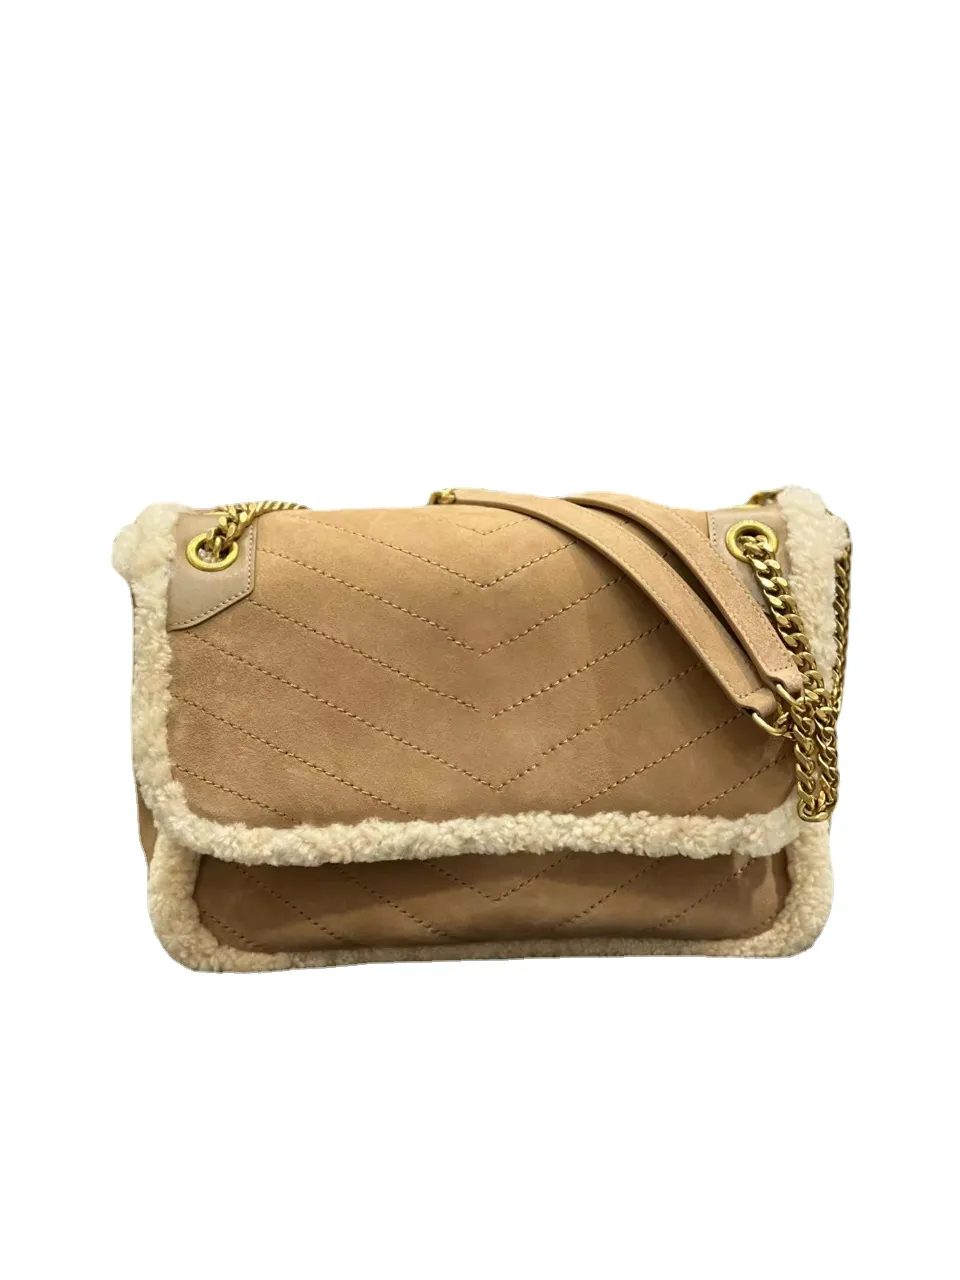 Classic women's bag Crossbody bag one shoulder bag new lamb suede gentle camel soft cute designer bag